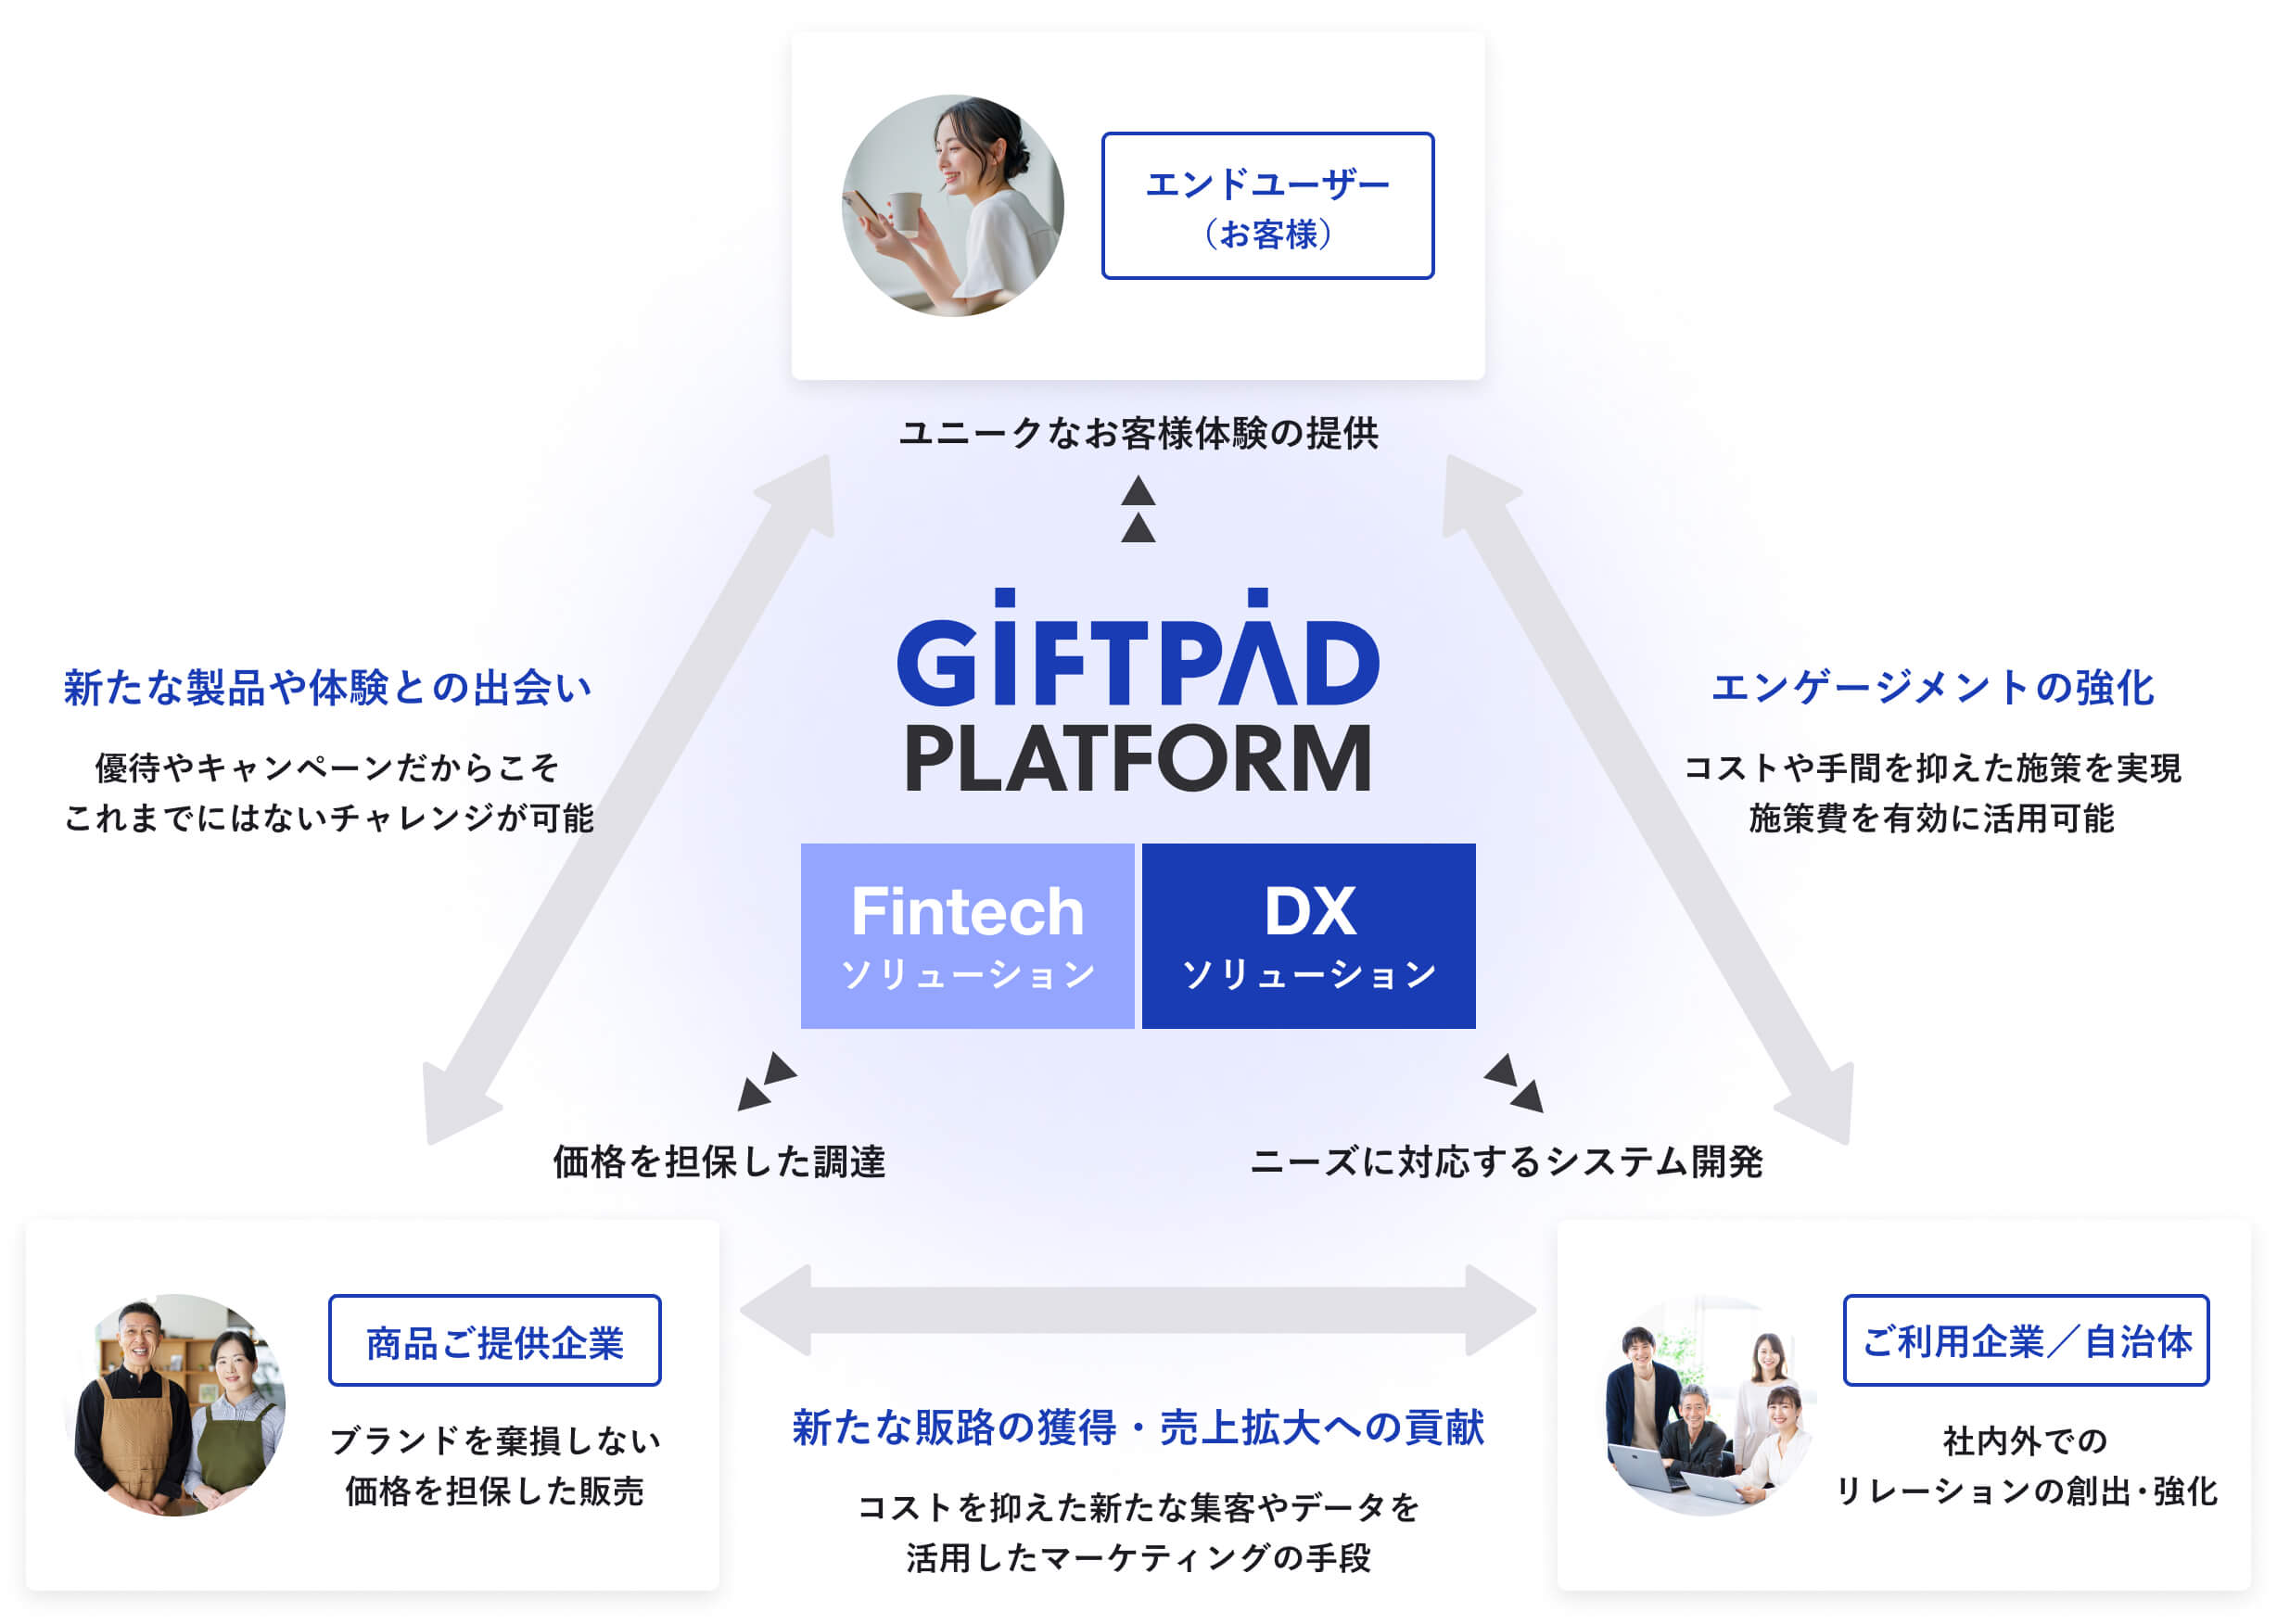 Giftpad platform